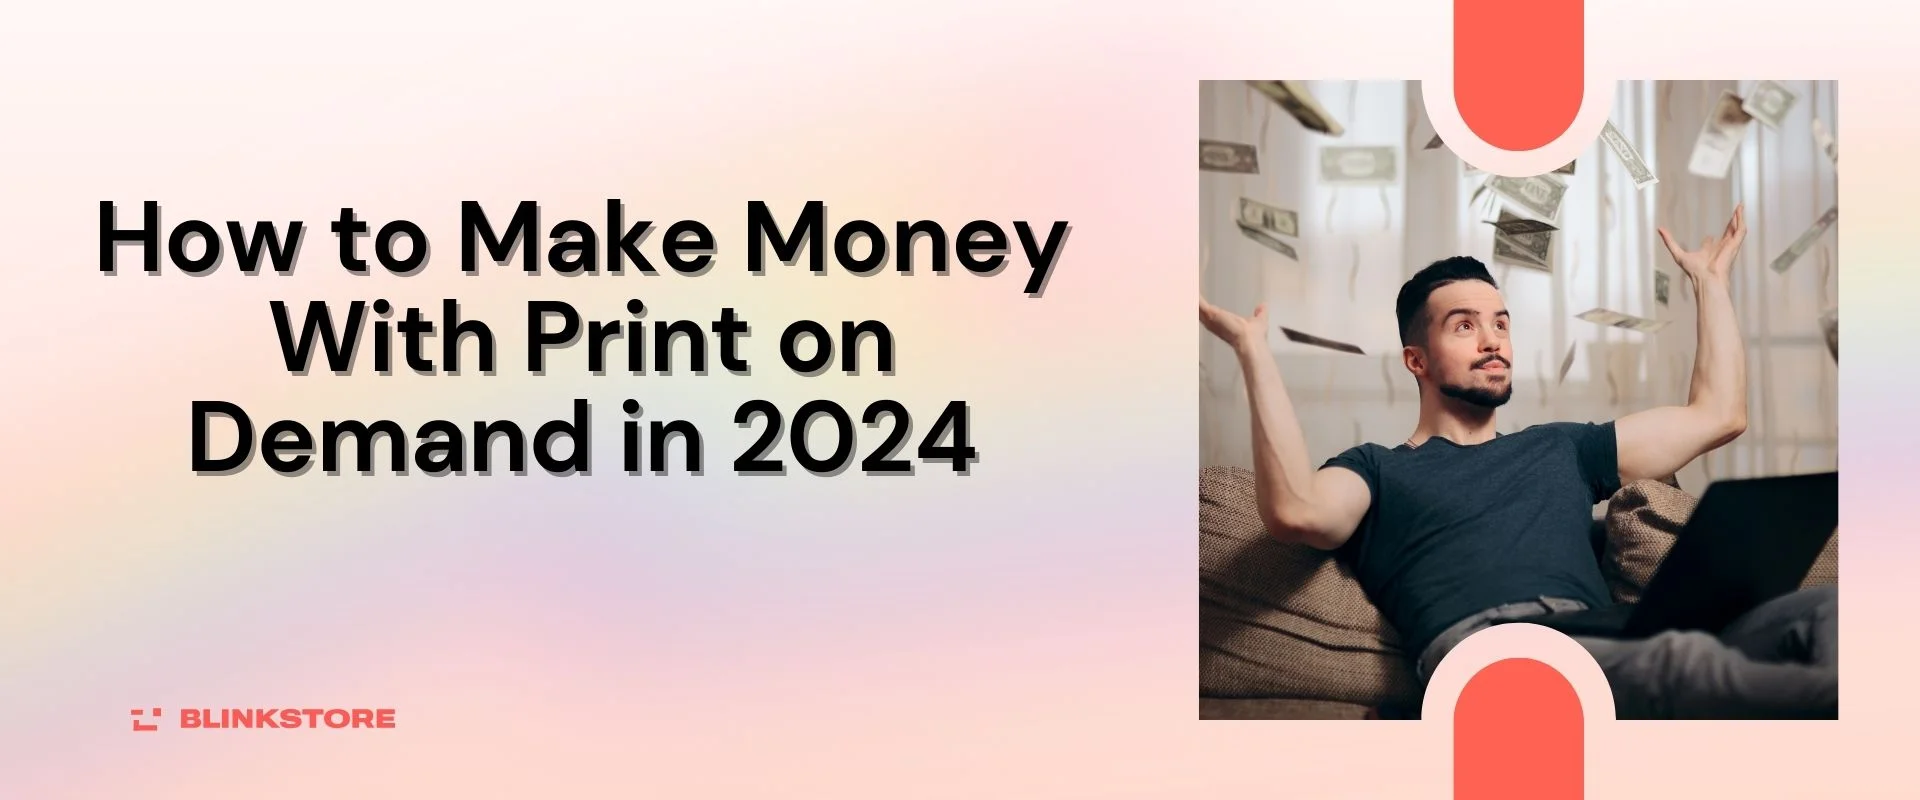 Make Money With Print on Demand